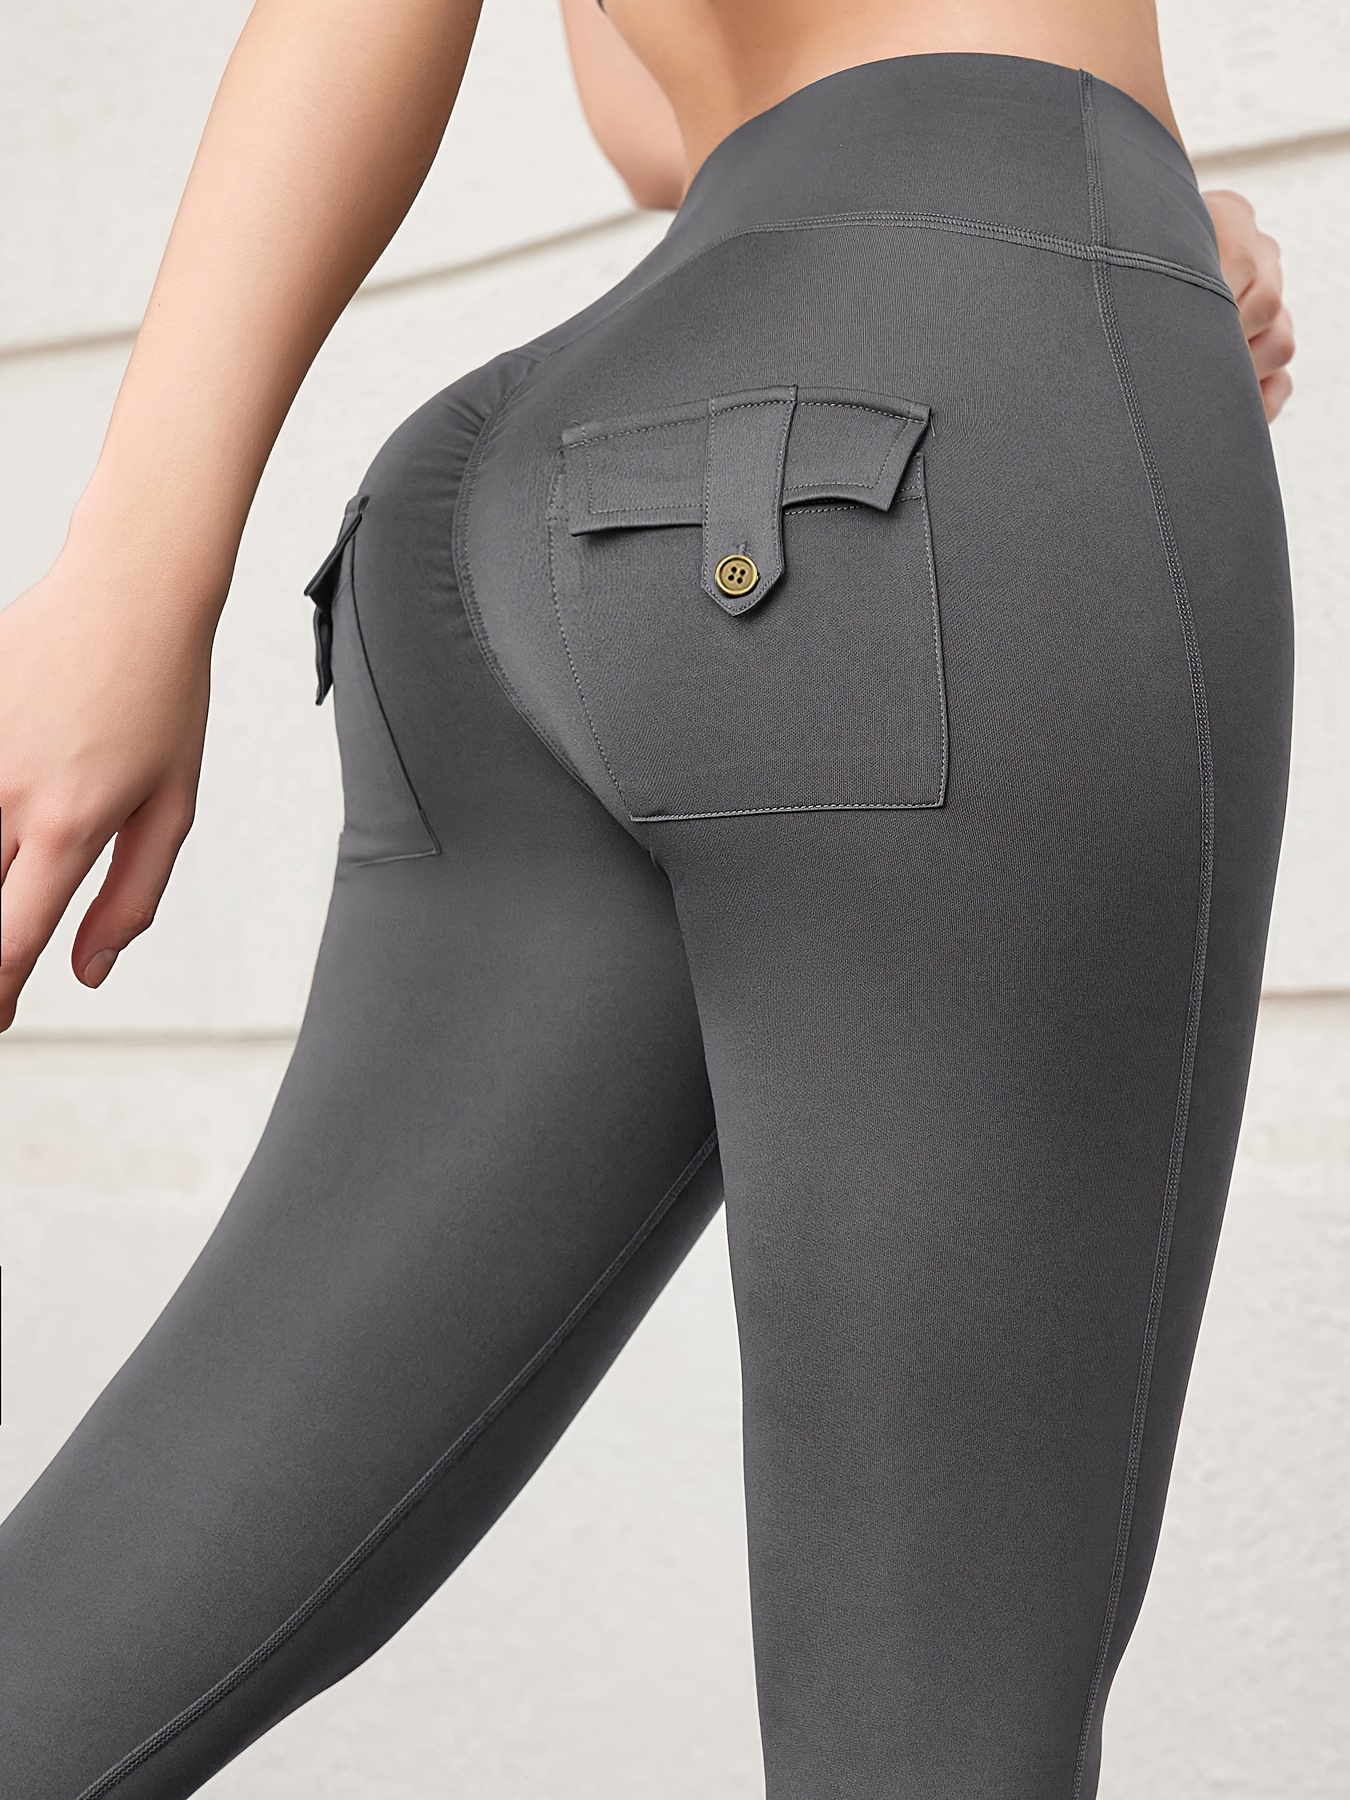 High Waist Butt Lifting Pocket Sports Pants Solid Color Yoga